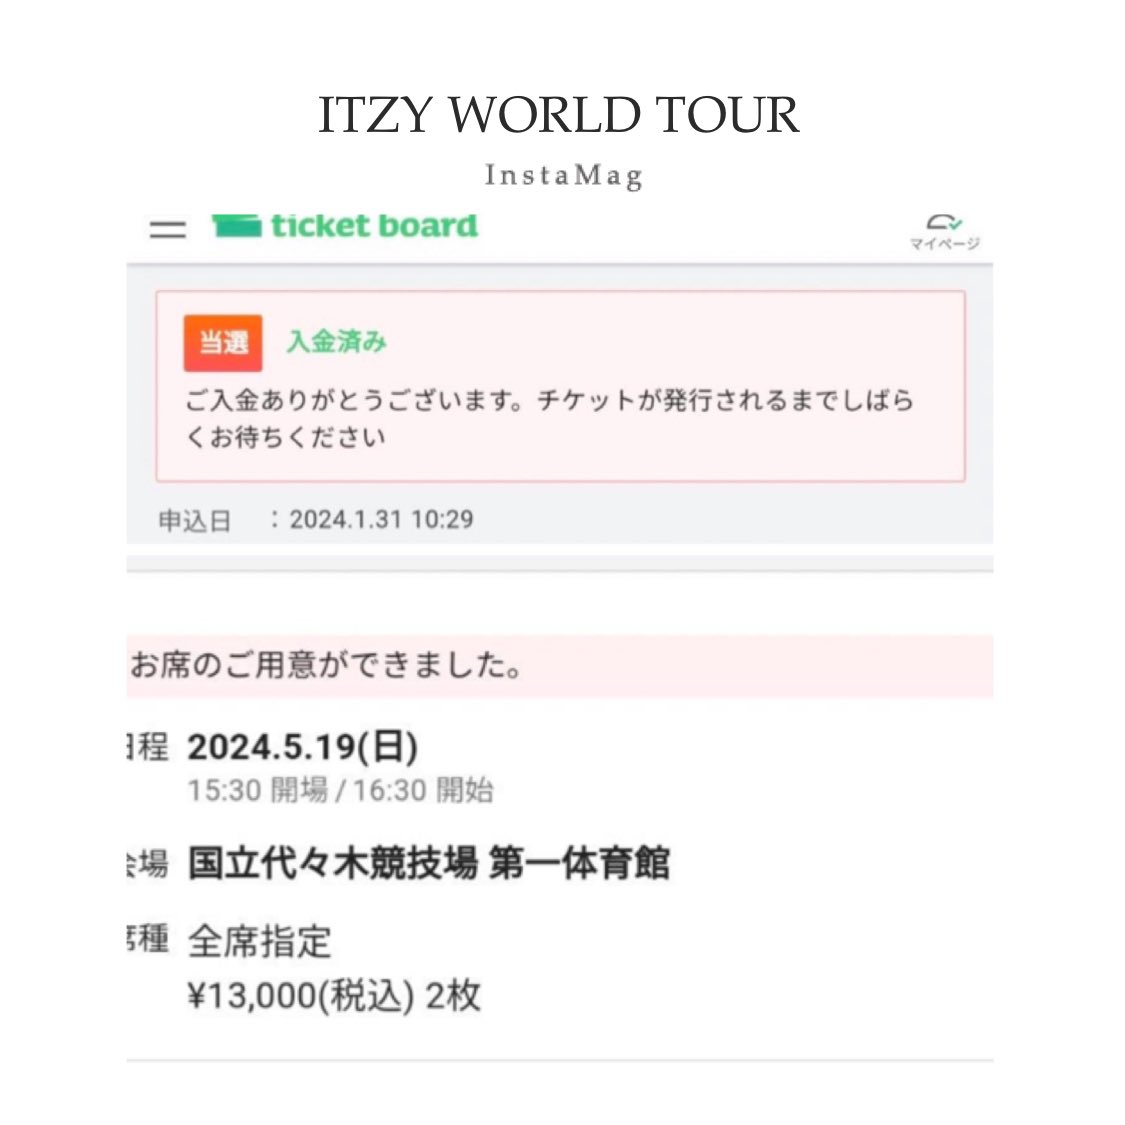 ☆*:.｡. o(≧▽≦)o .｡.:*☆ #ITZY #ITZY_WORLD_TOUR #midzy #ITZY_BORNTOBE #있지